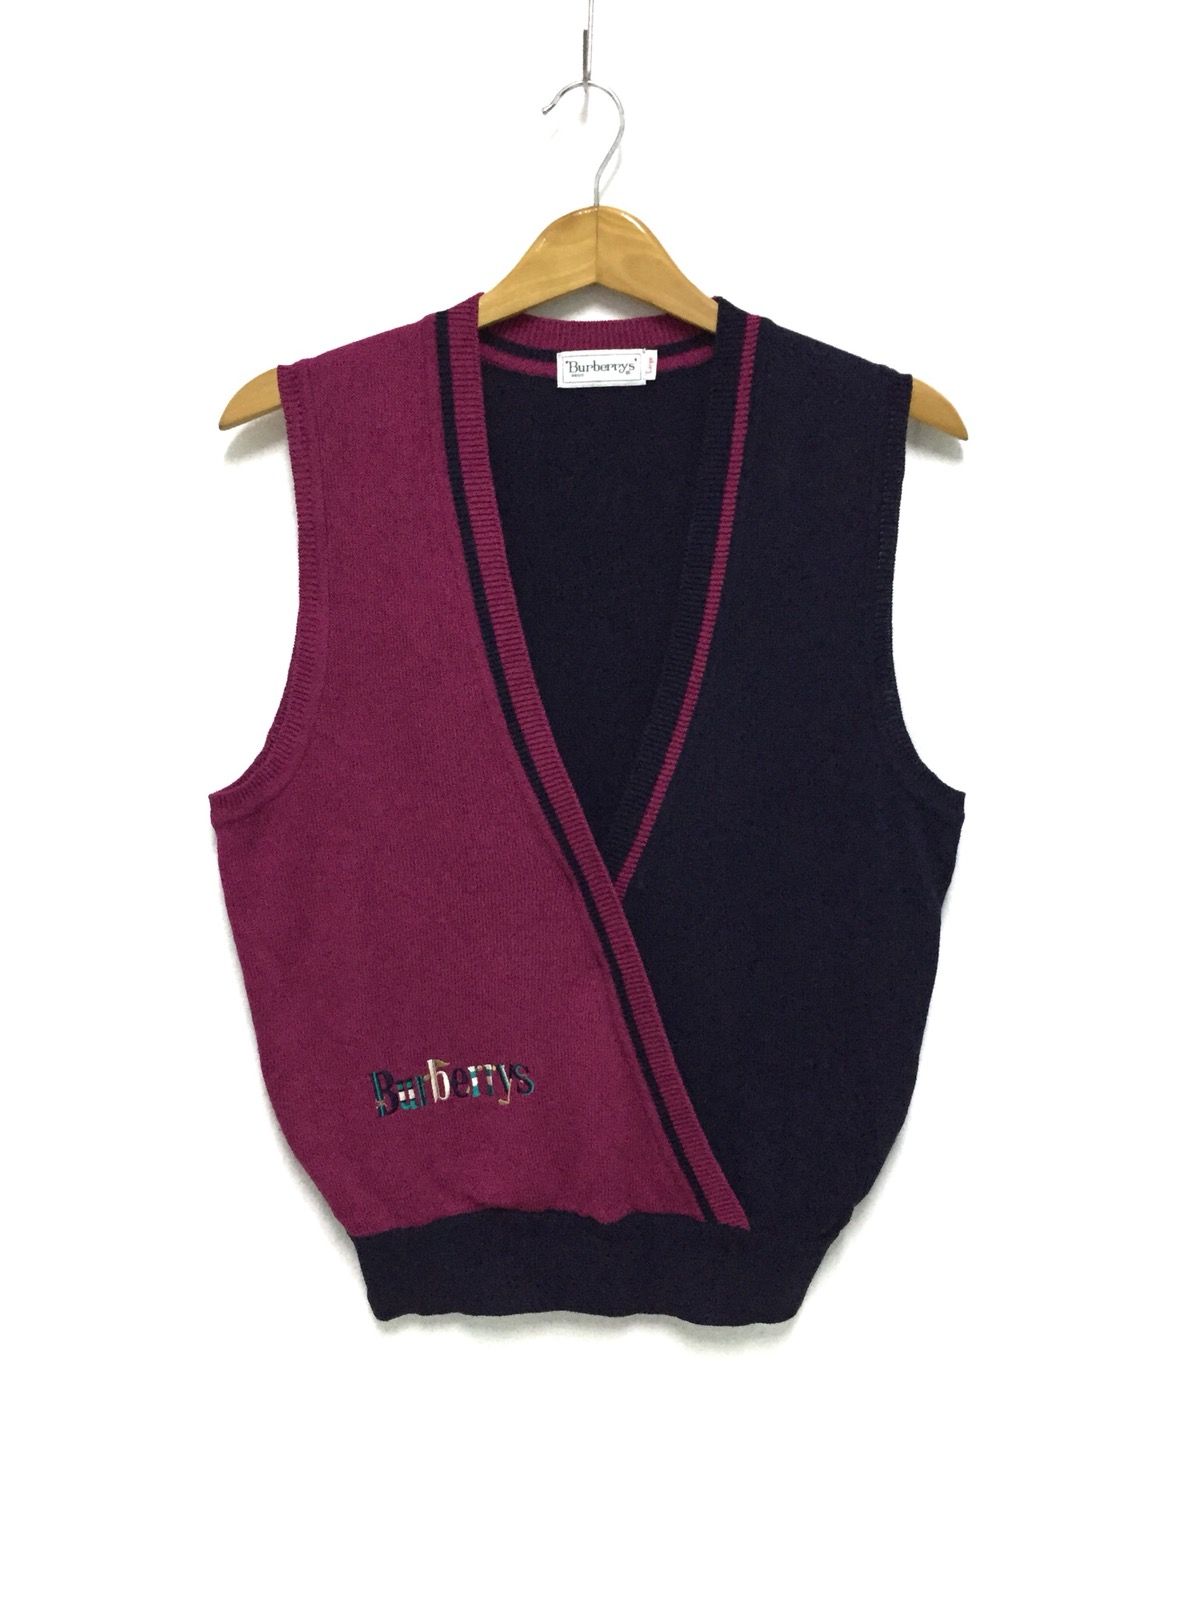 Burberry Burberrys Formal Vest Shirt Spell Out Size US L / EU 52-54 / 3 - 1 Preview